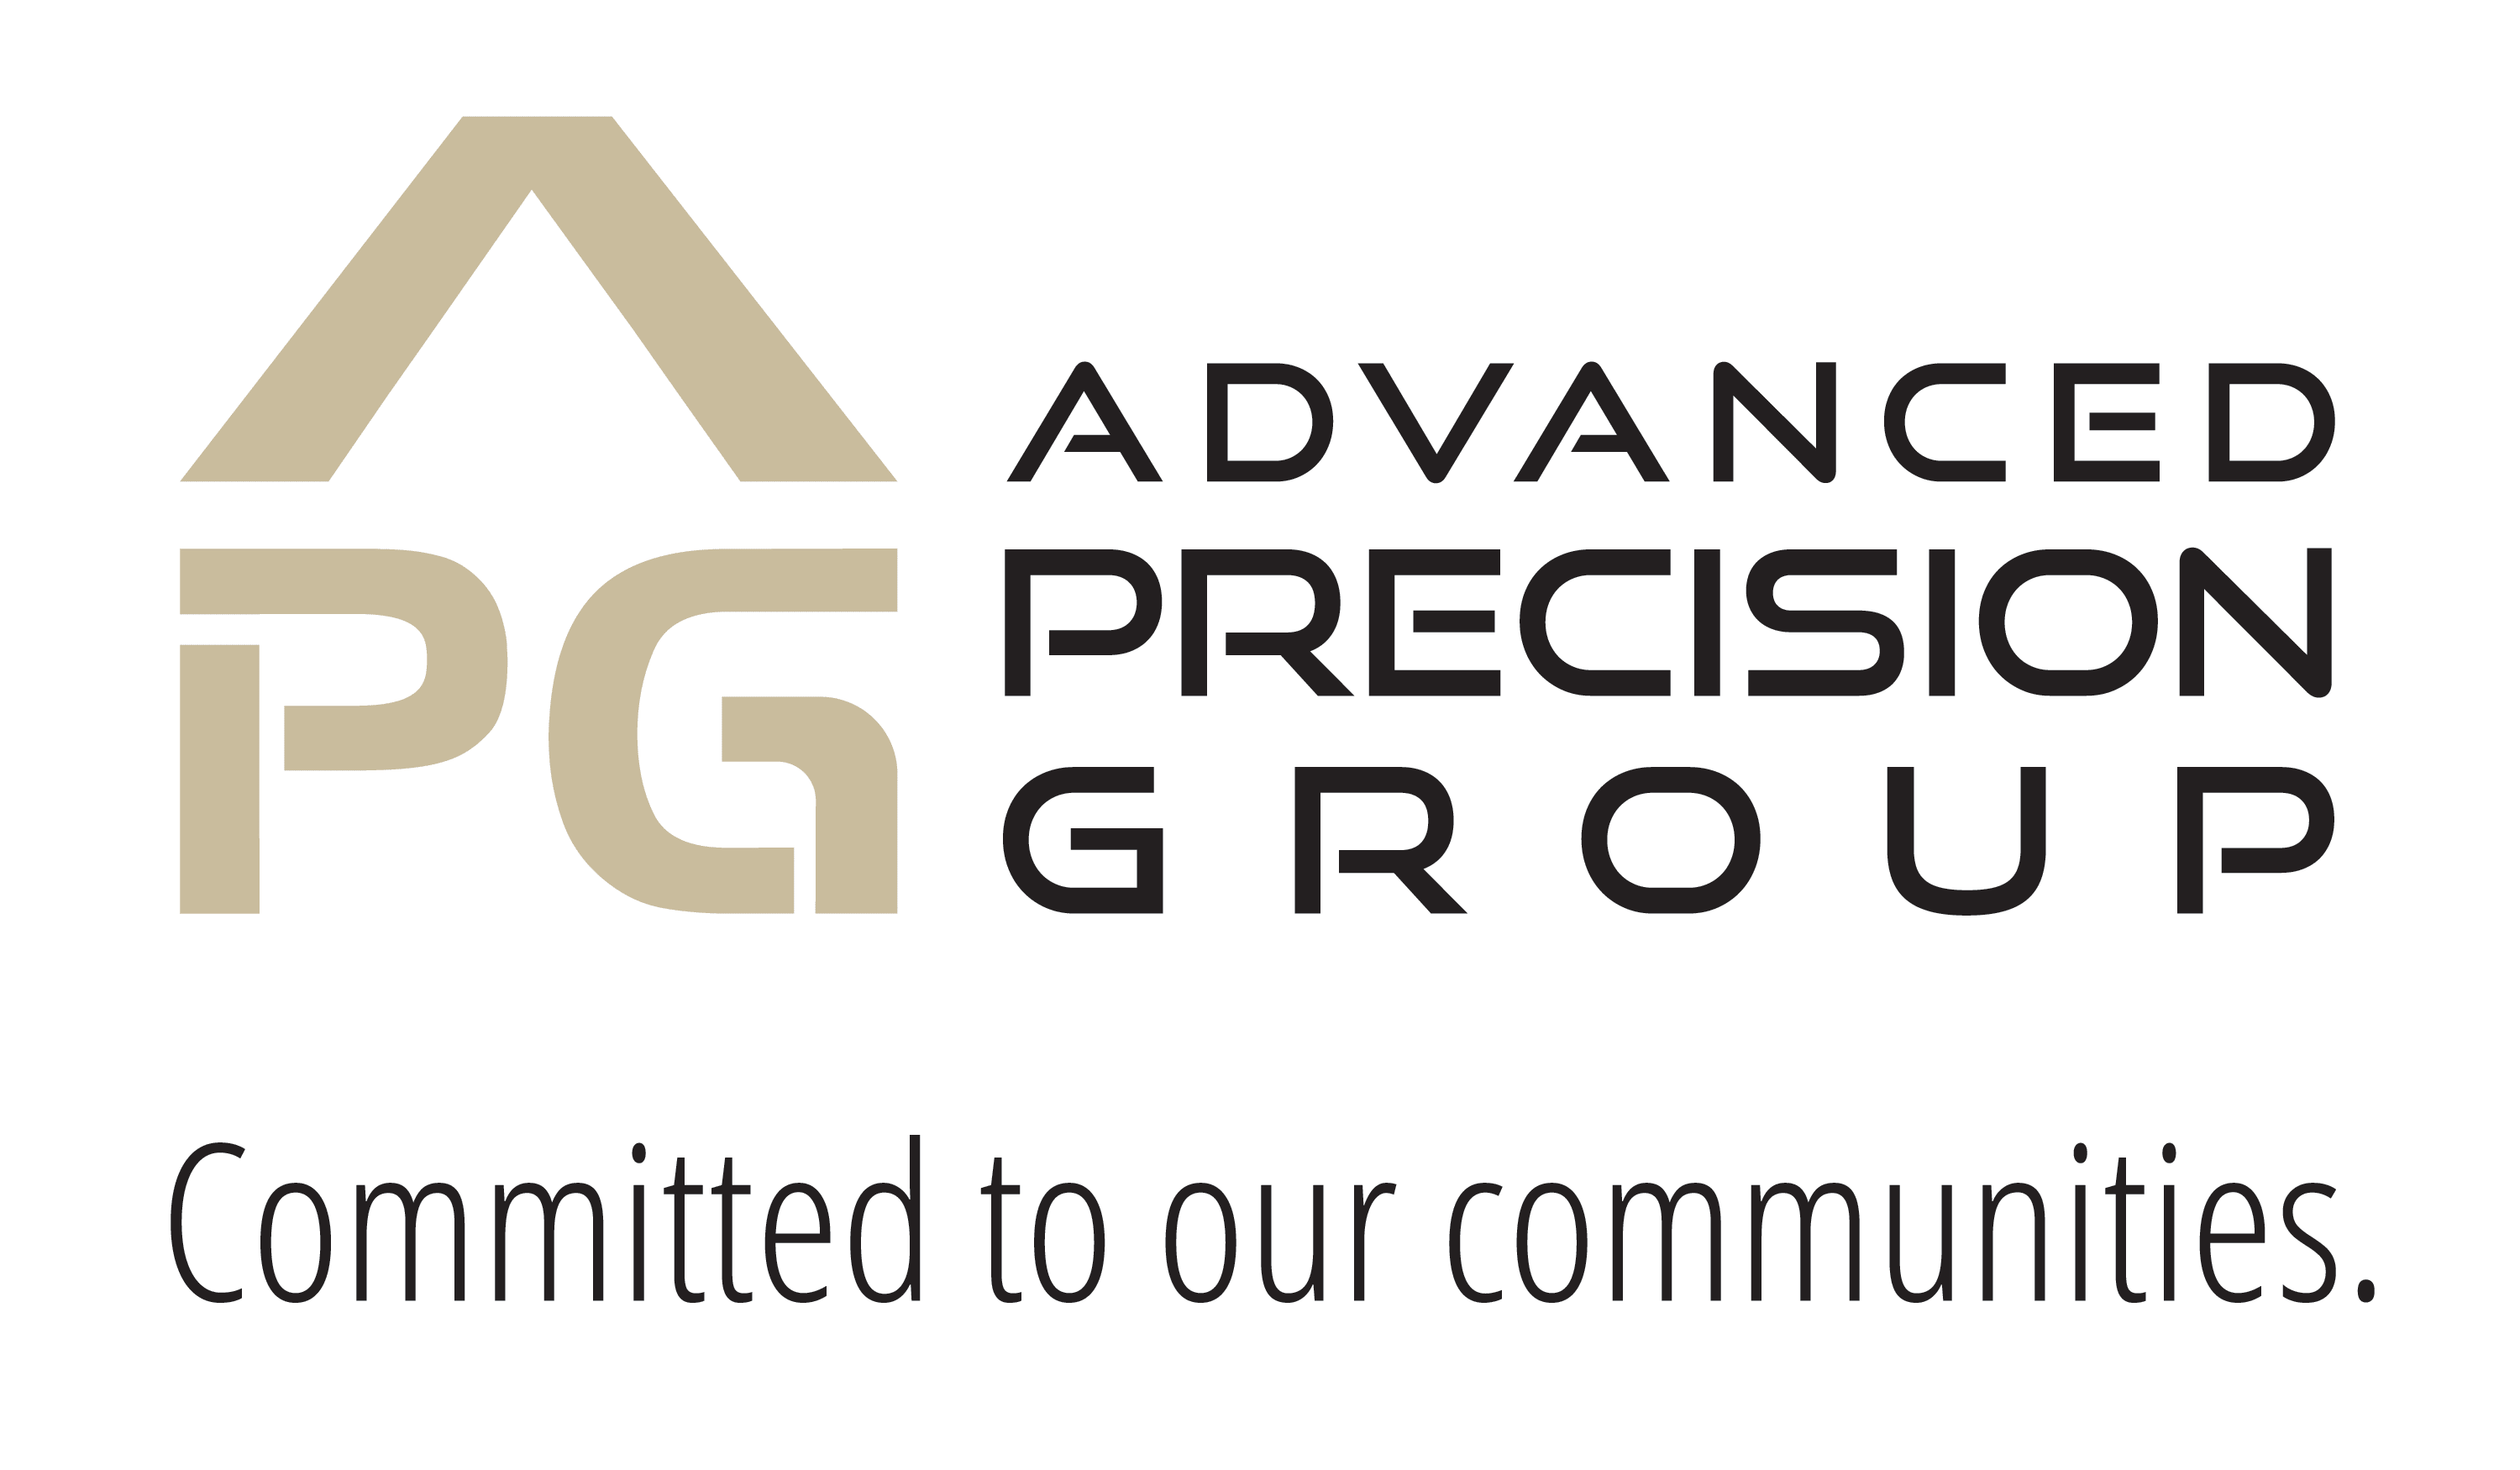 the advanced precision group logo